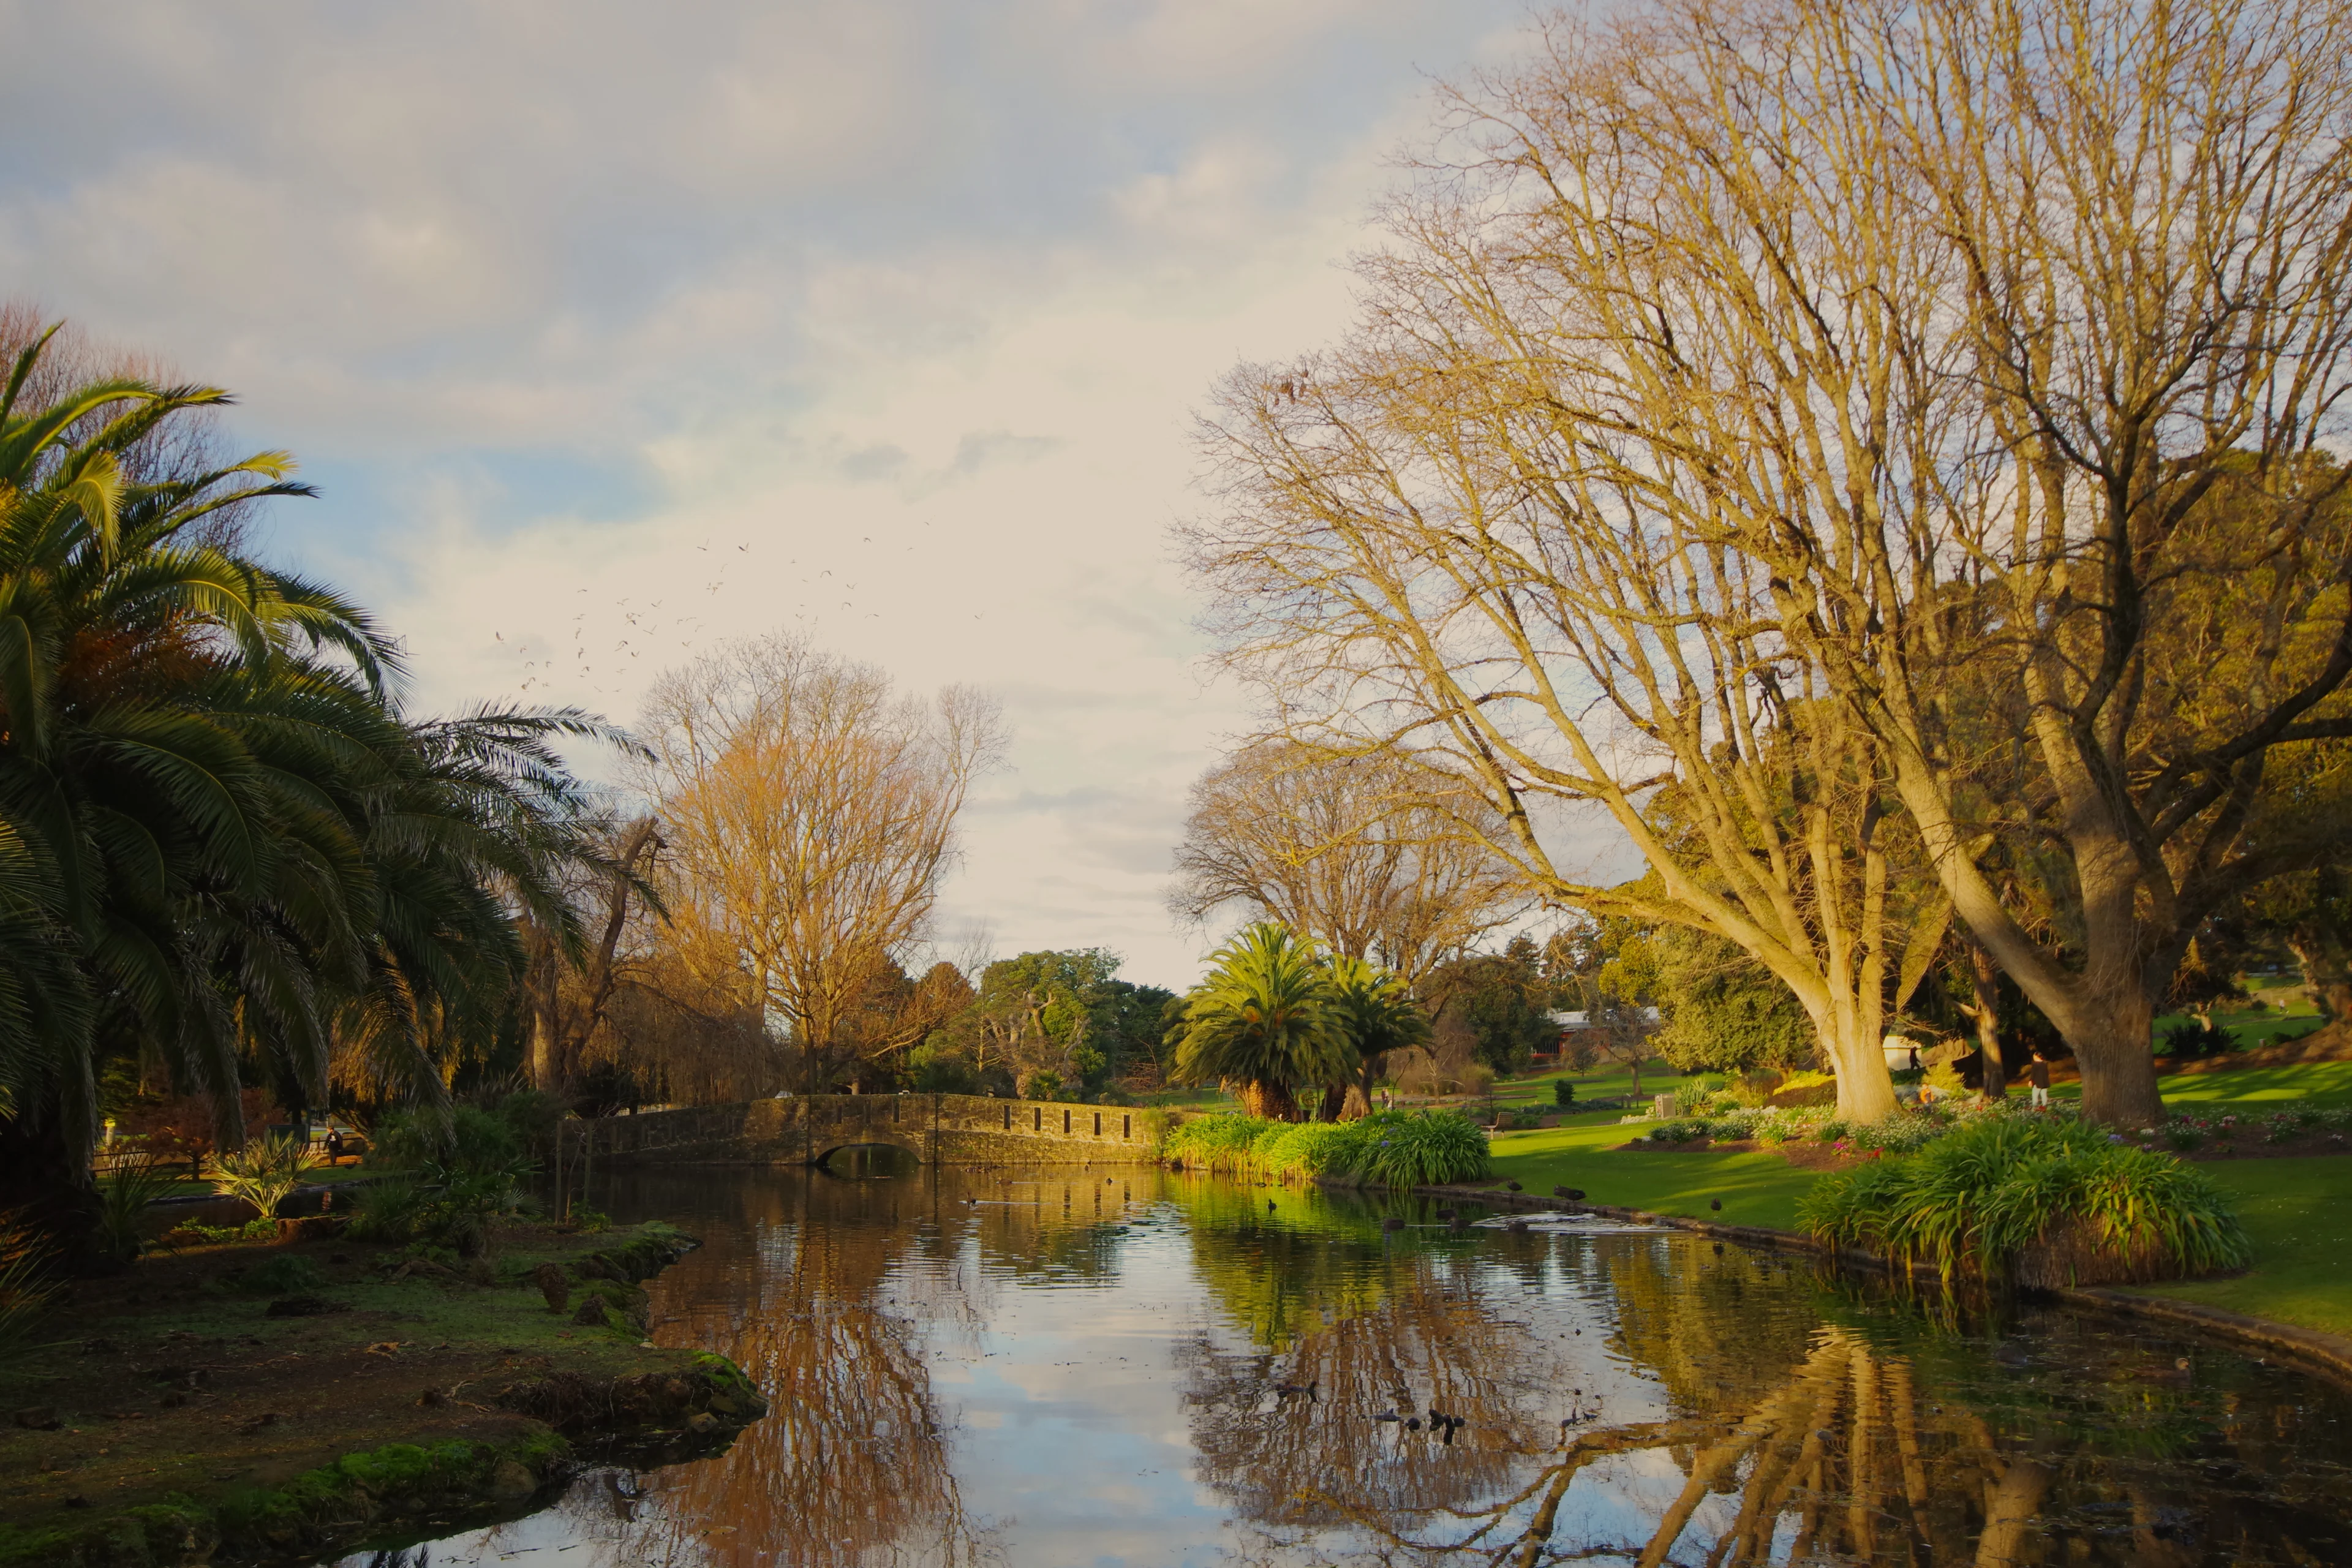 Pond and bridge with a flock of birds in flight. Warrnambool Botanic Gardens, Warrnambool, Victoria.